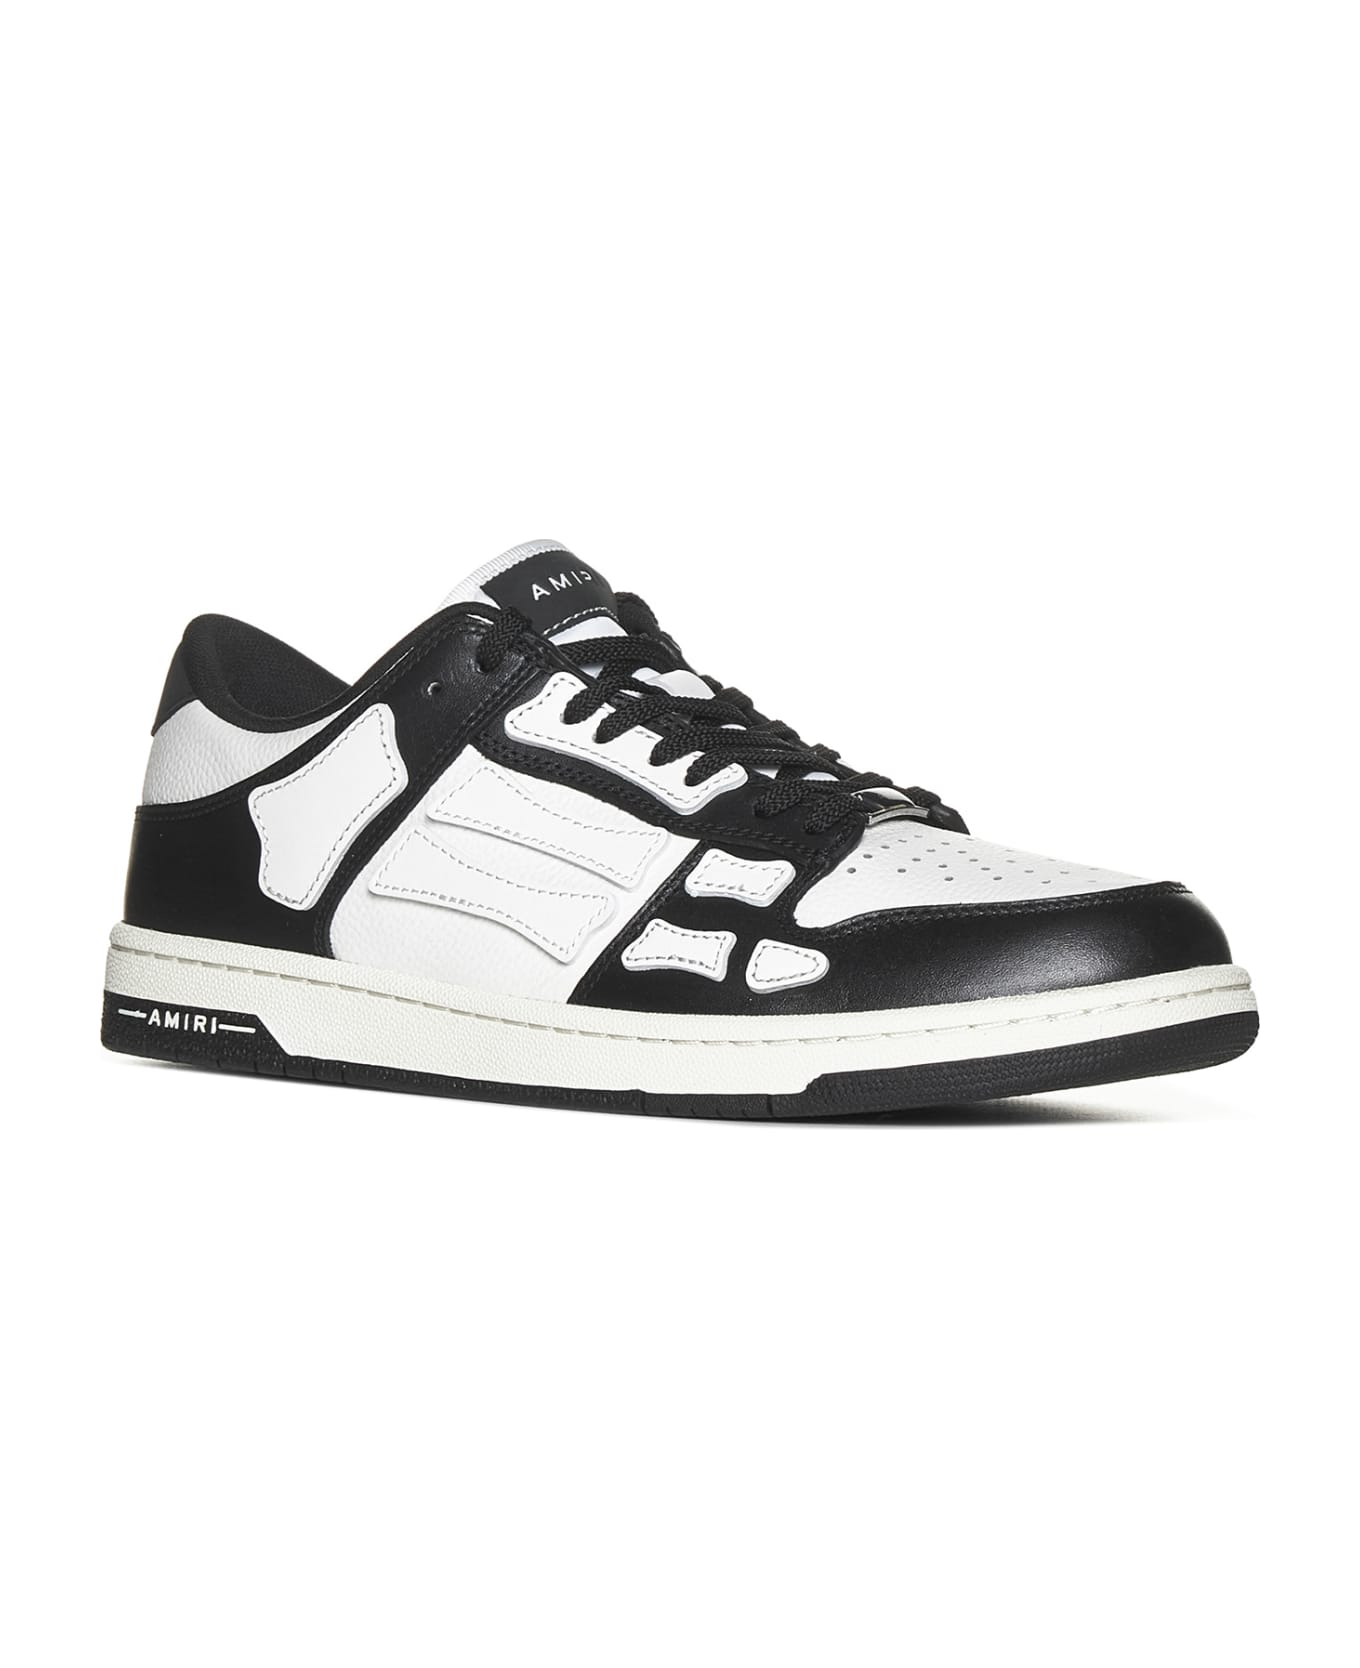 AMIRI Sneakers - Black/white スニーカー